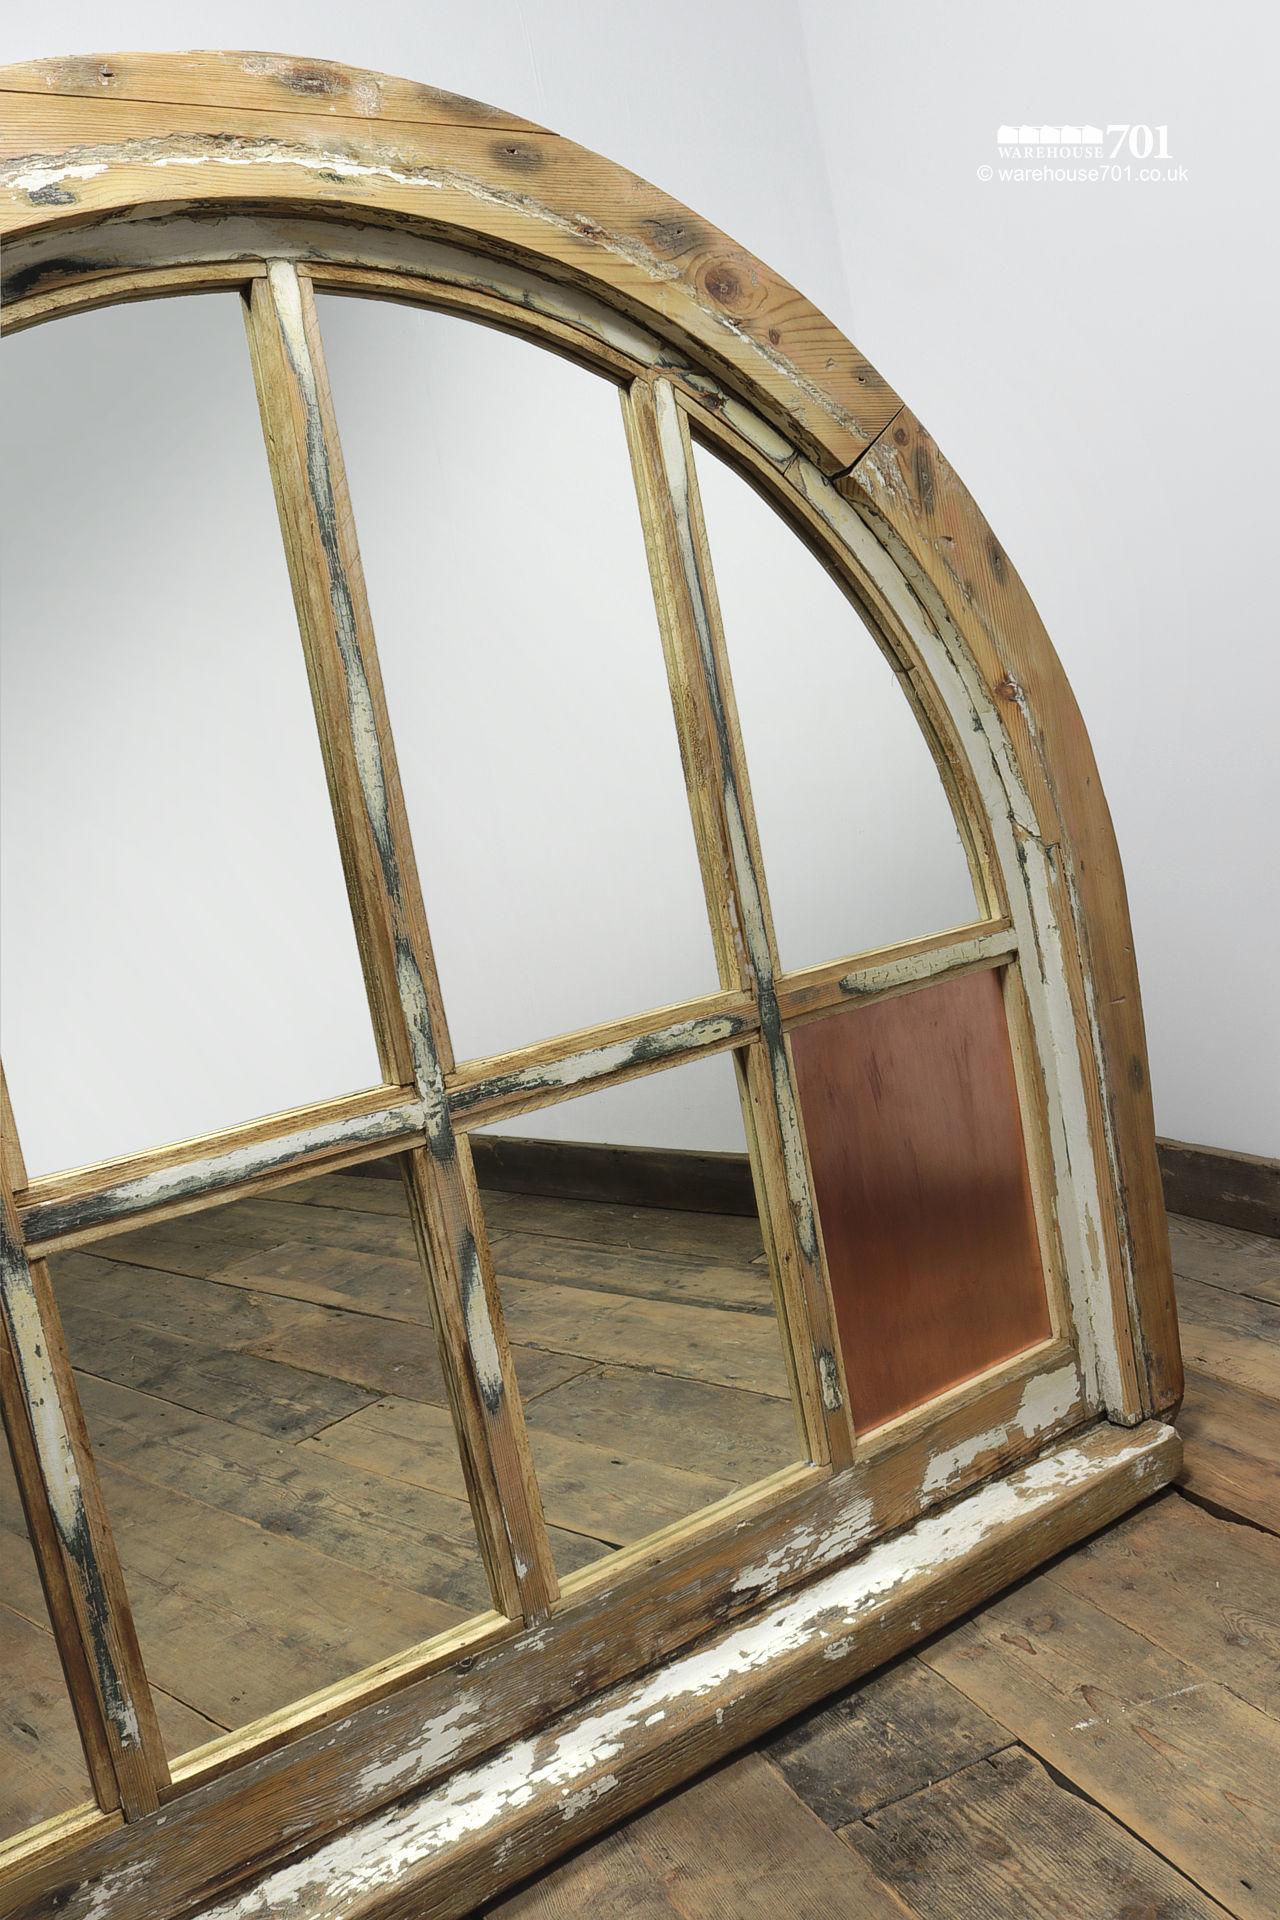 Impressive Architectural Copper and Wood Window Mirror #5